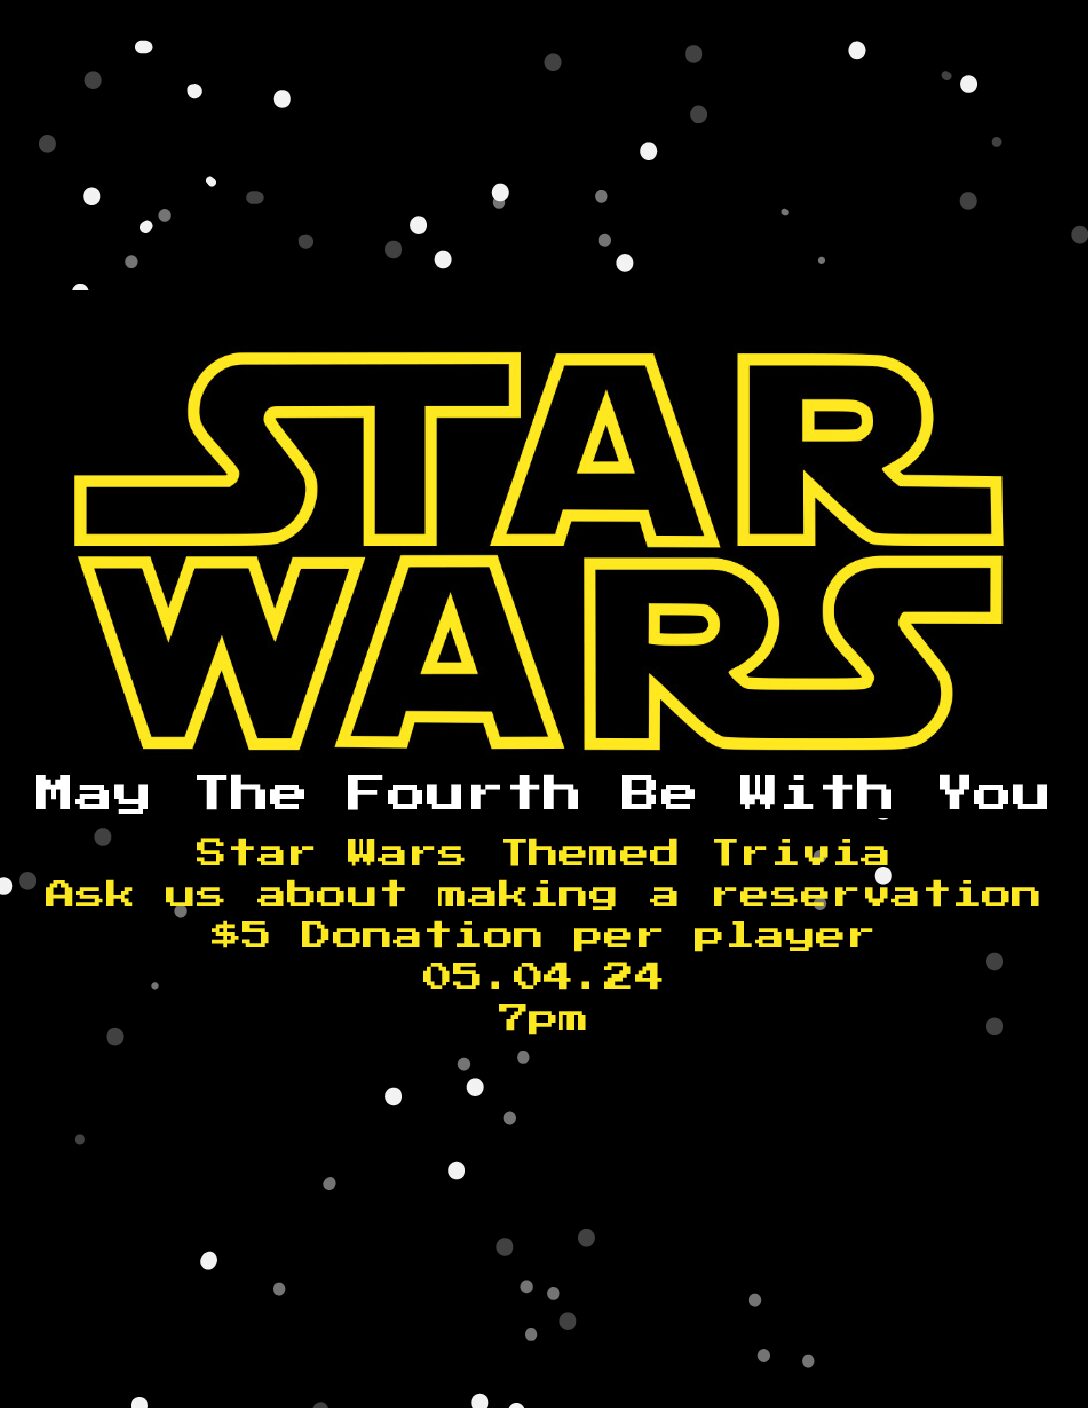 Star Wars Themed Trivia!